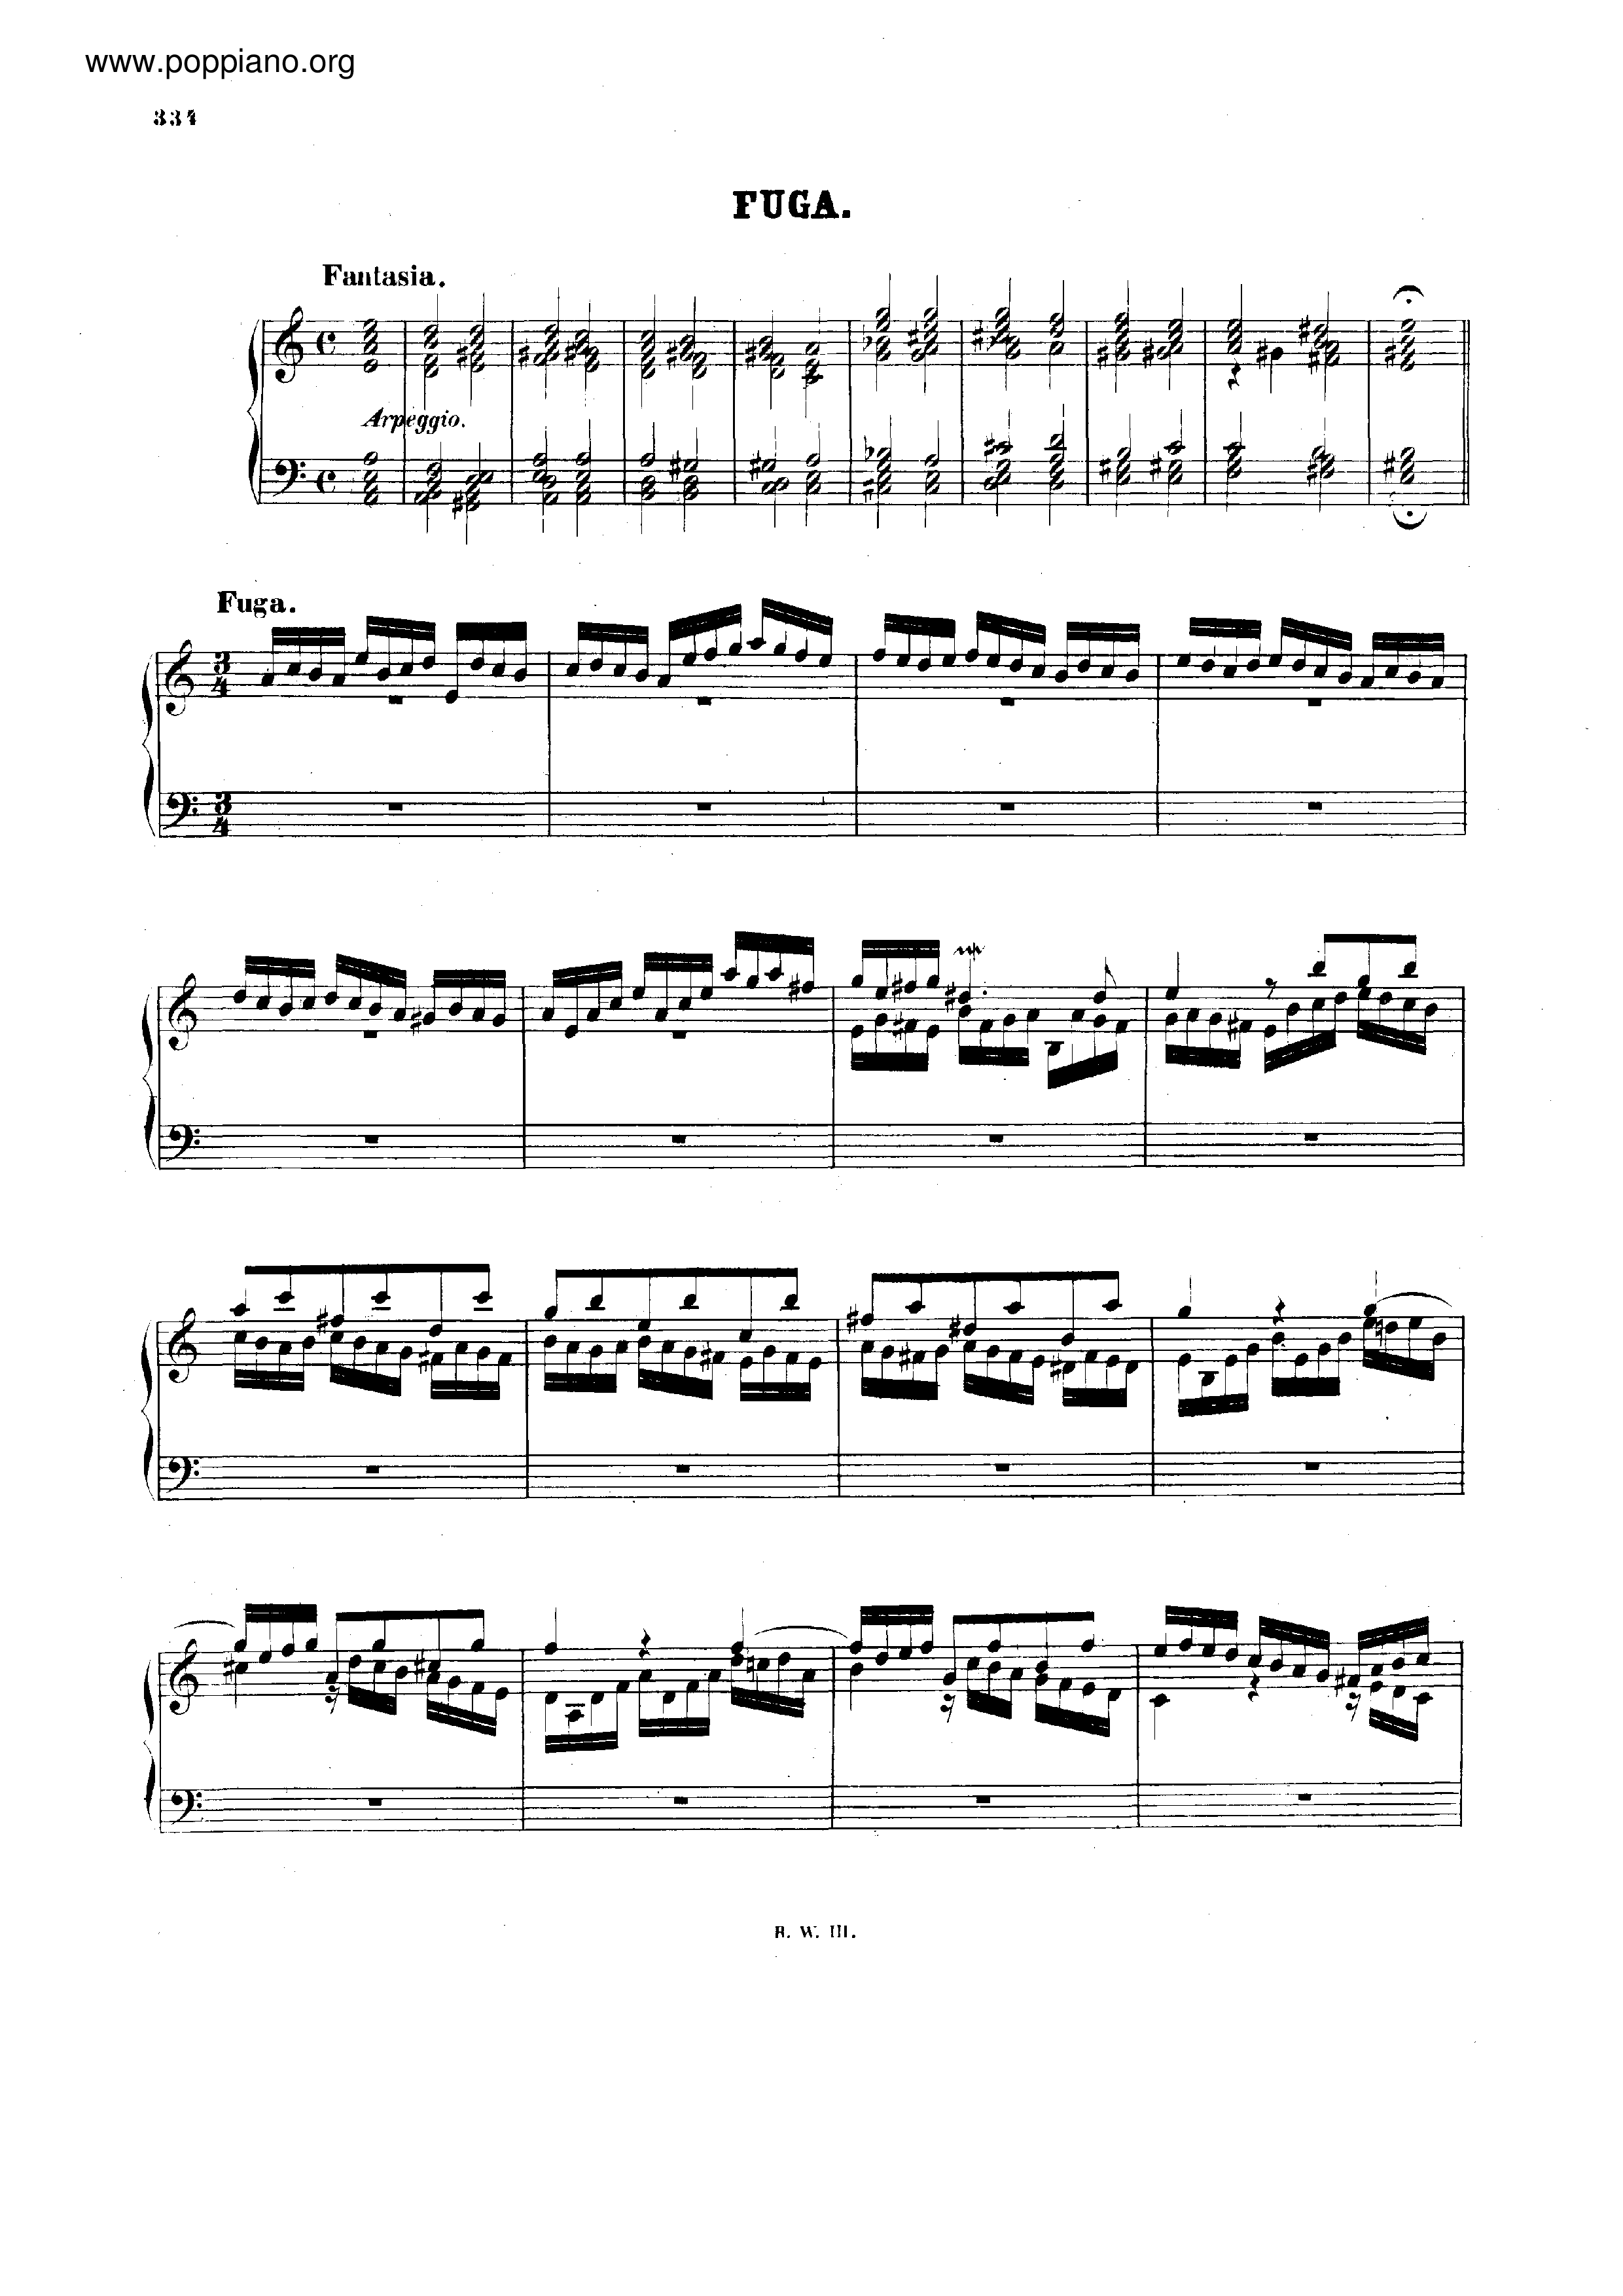 Fugue in A minor, BWV 944ピアノ譜